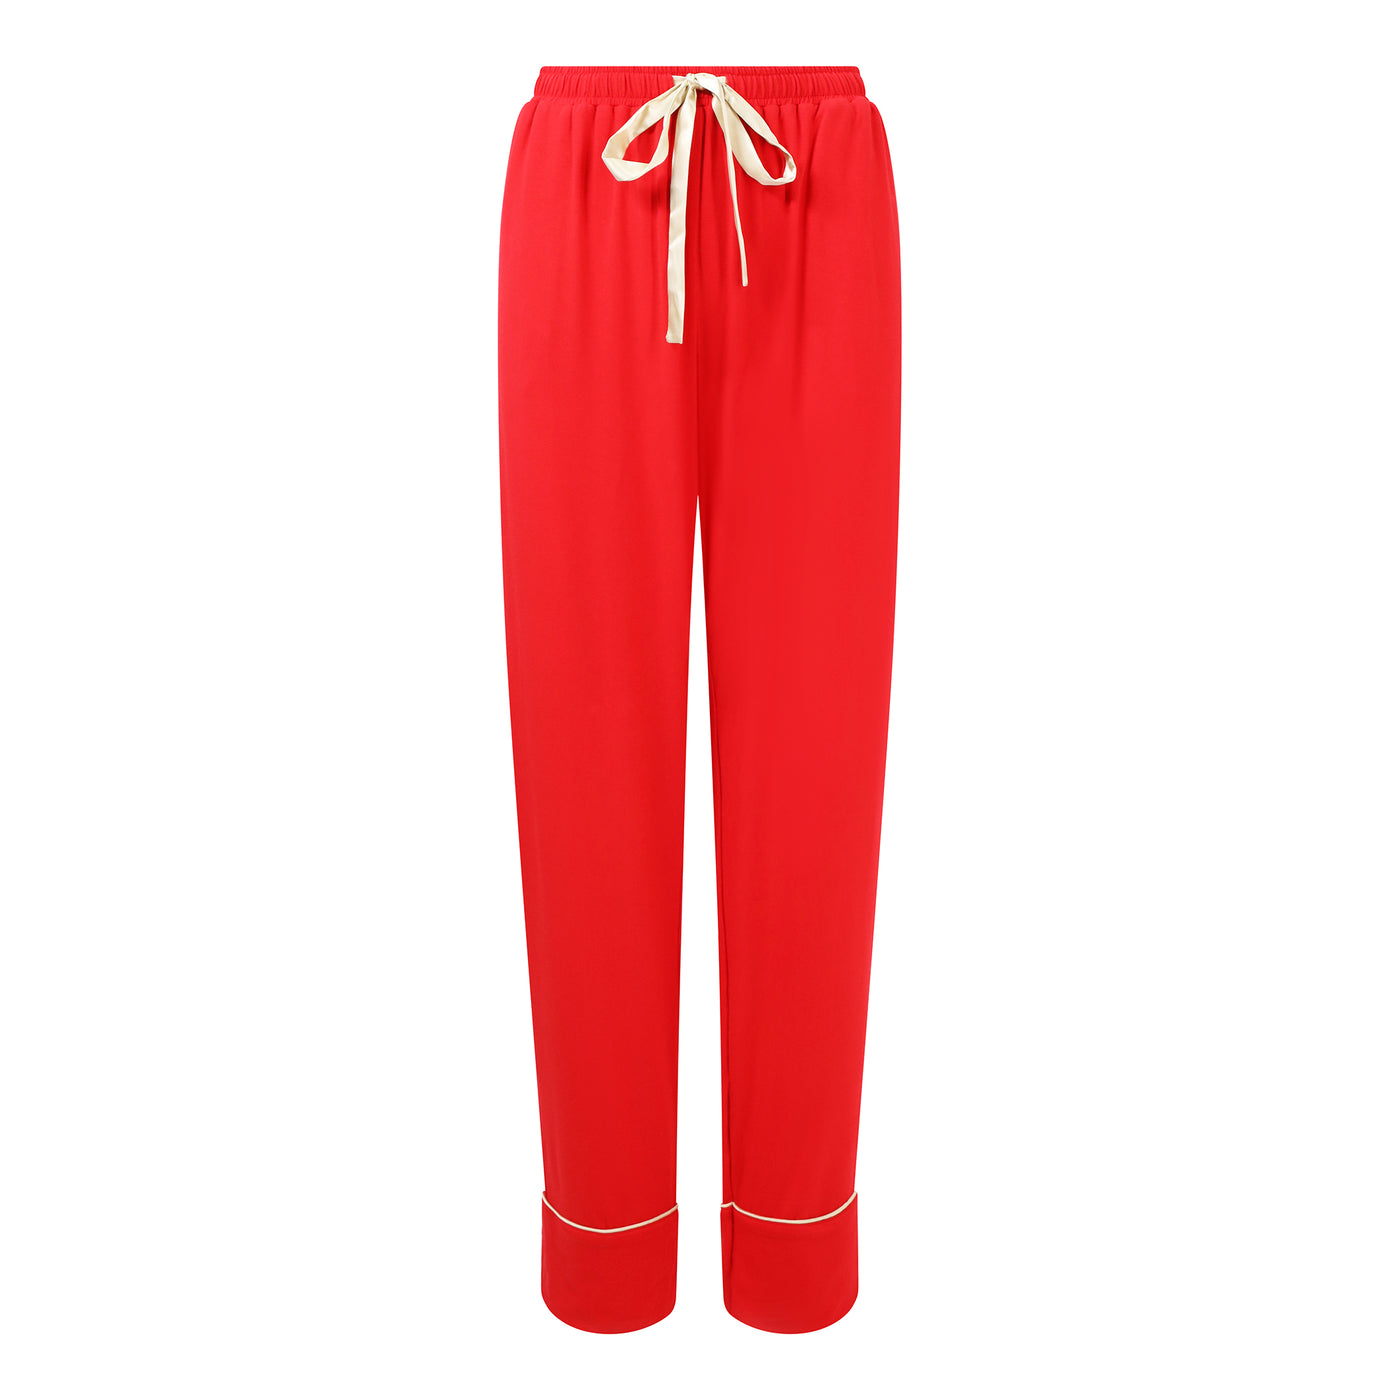 Men's Modal Pyjama Set - Red